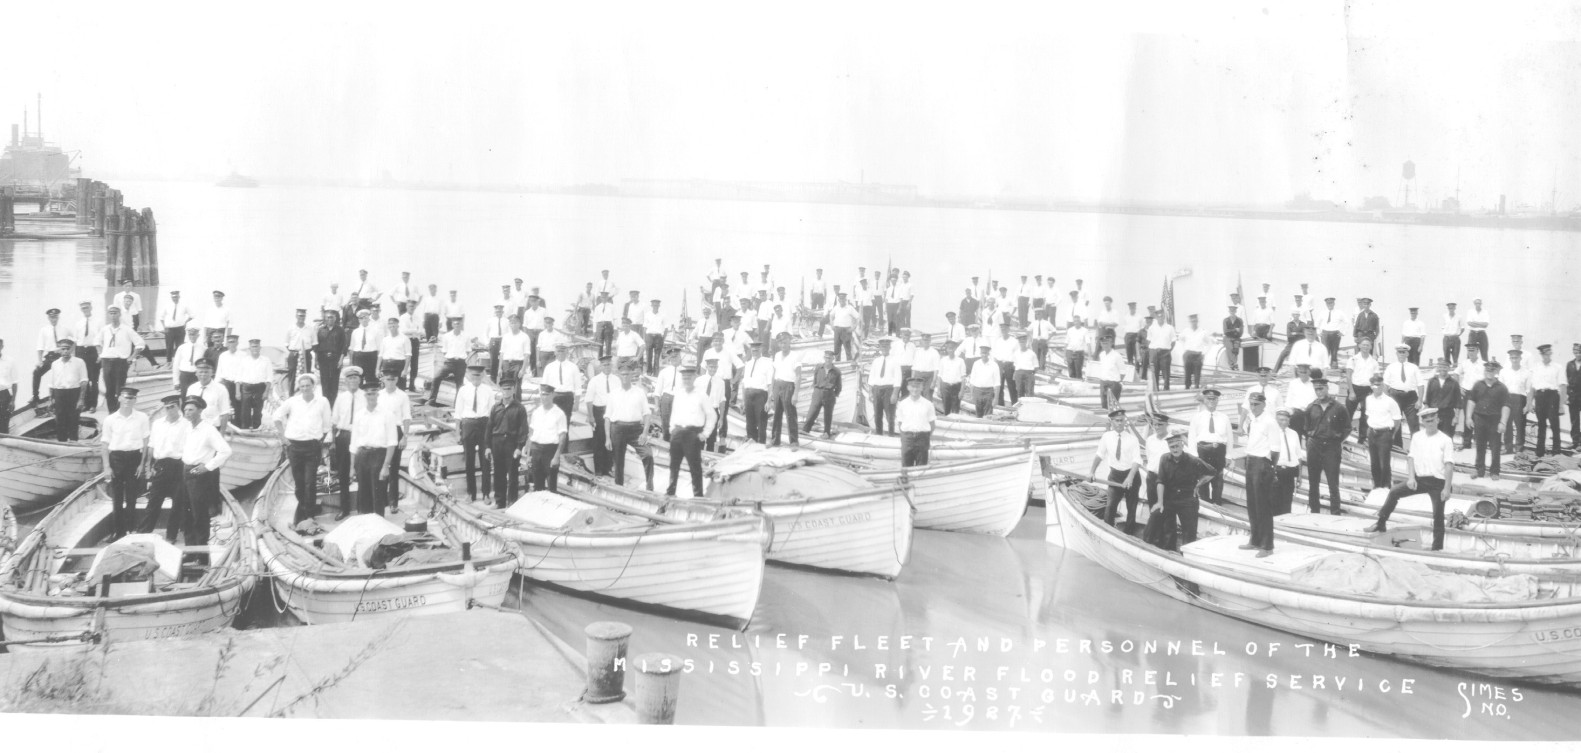 The U.S. Coast Guard's "Relief Fleet" assembled to meet the emergency, 1927. 